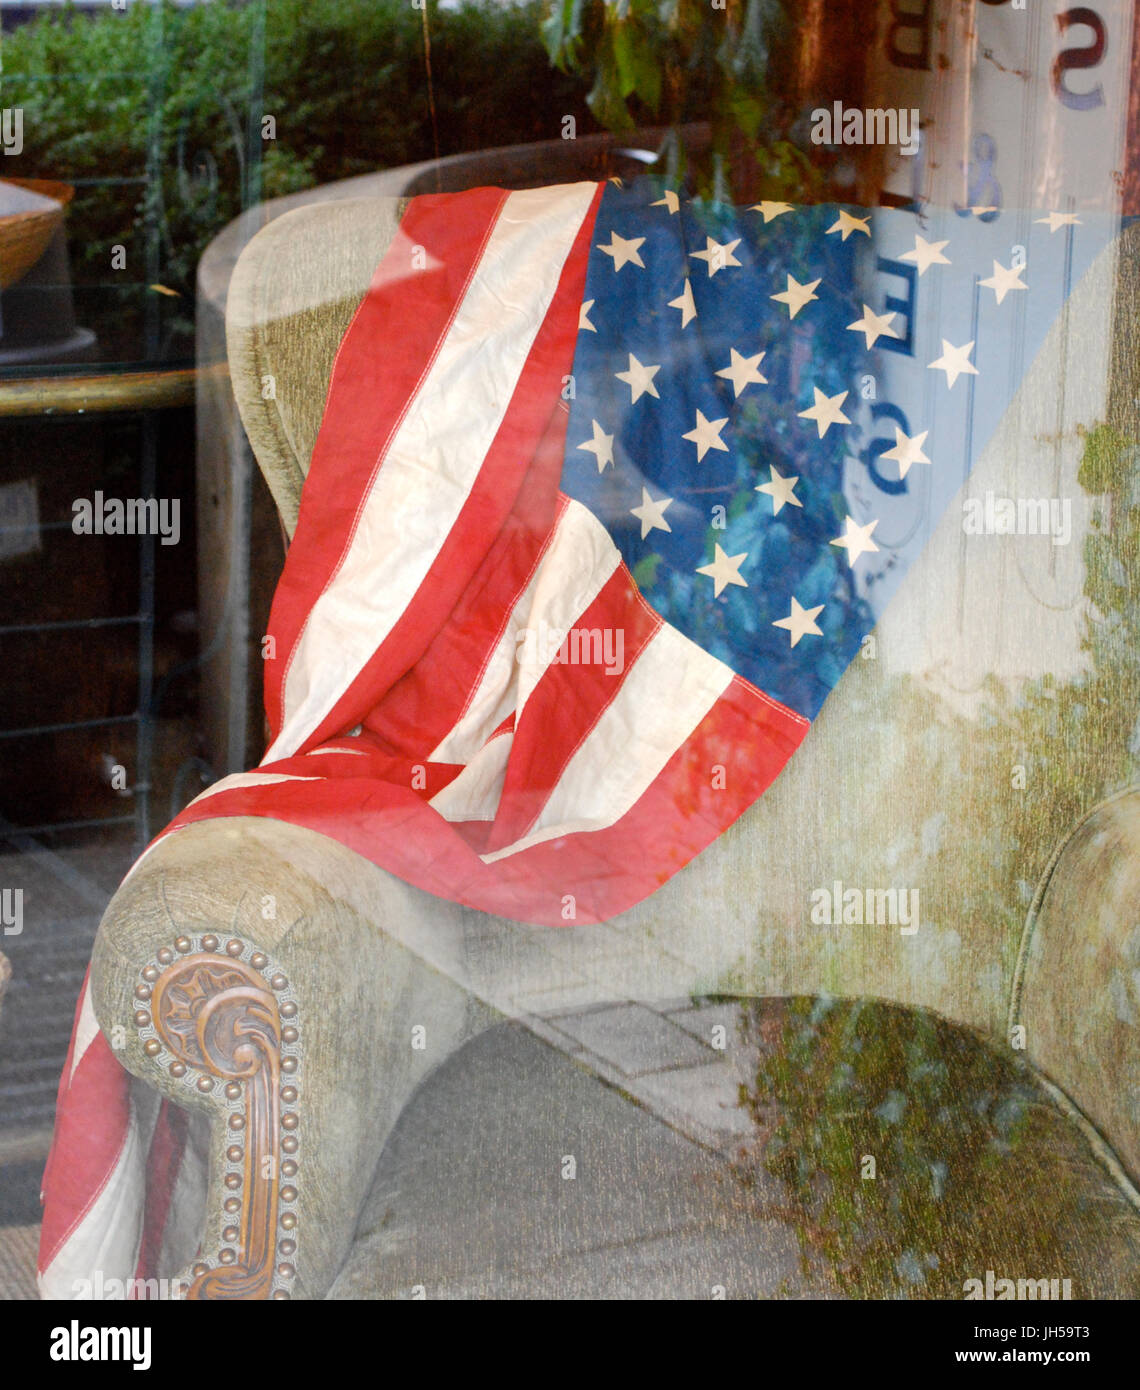 American flag draped over a vintage chair - fourth of July Window display Bainbridge Island, WA. USA Stock Photo